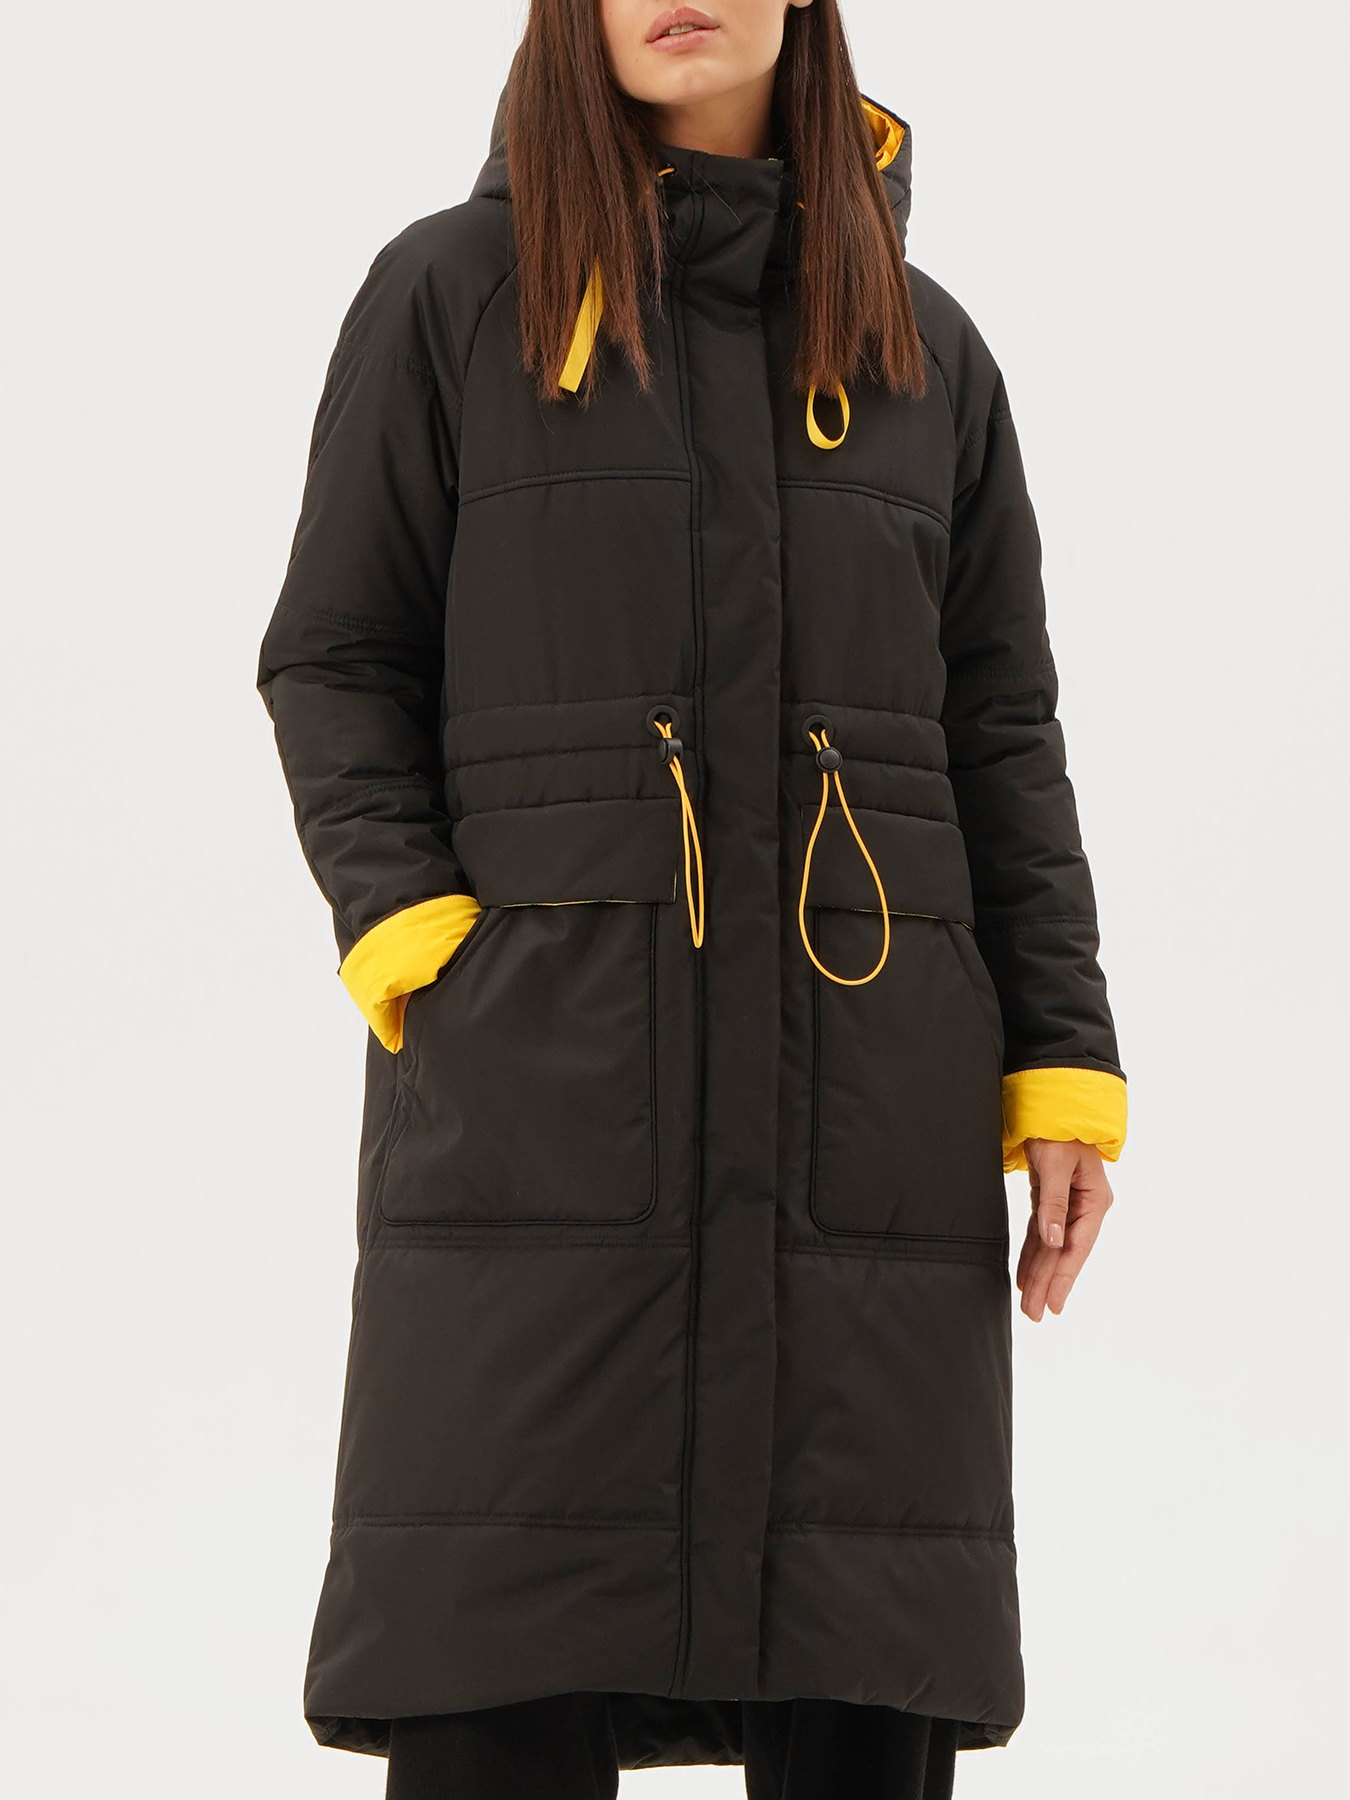 Пальто зимнее Maritta 433538-025, цвет черный, размер 48